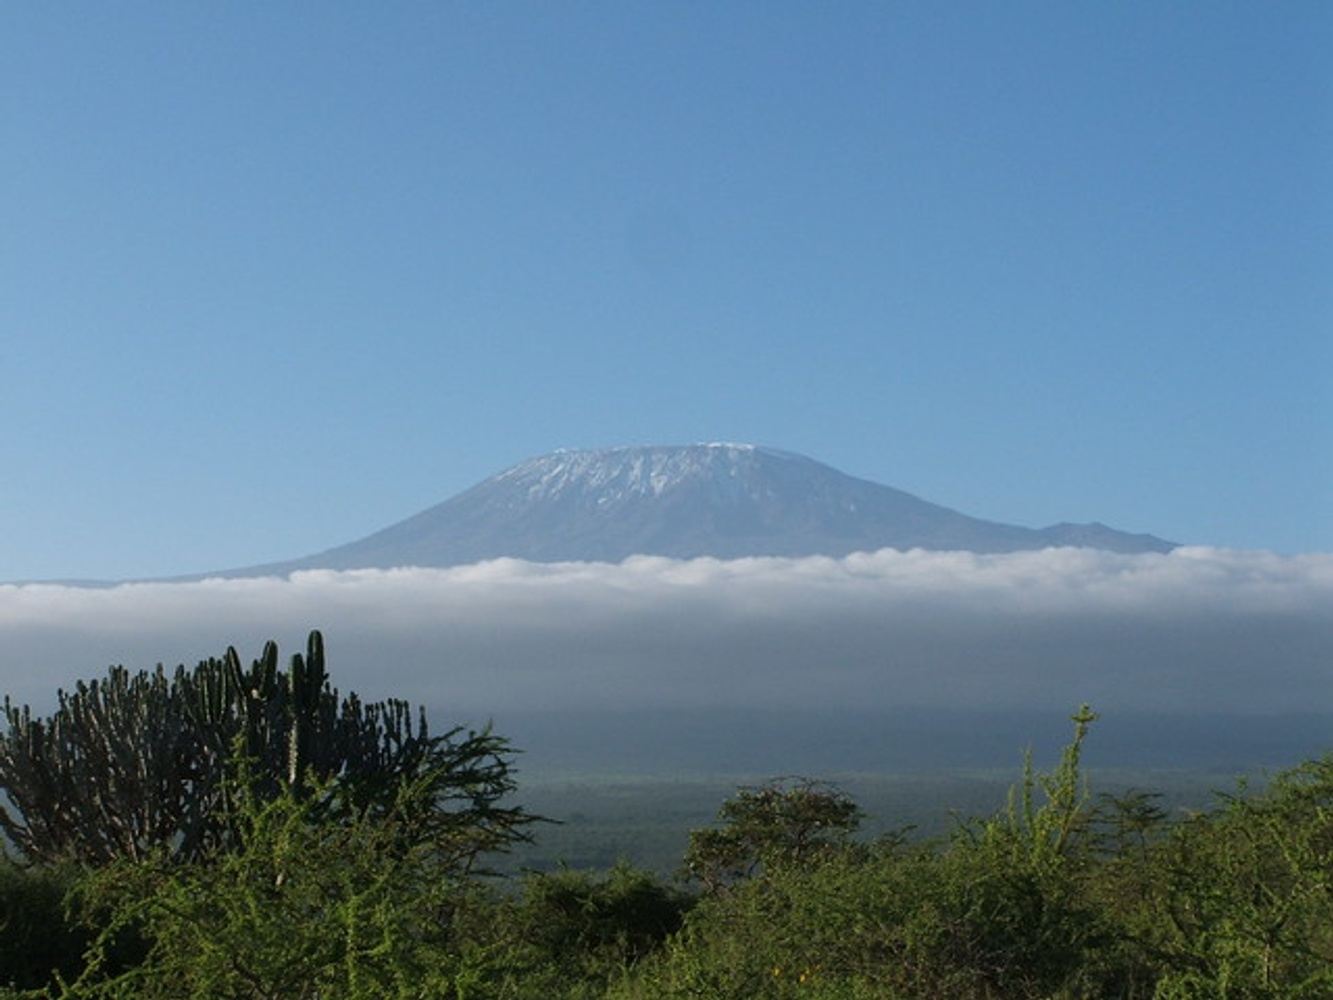 Kilimanjaro 8 day climb via Lemosho route - Join Group